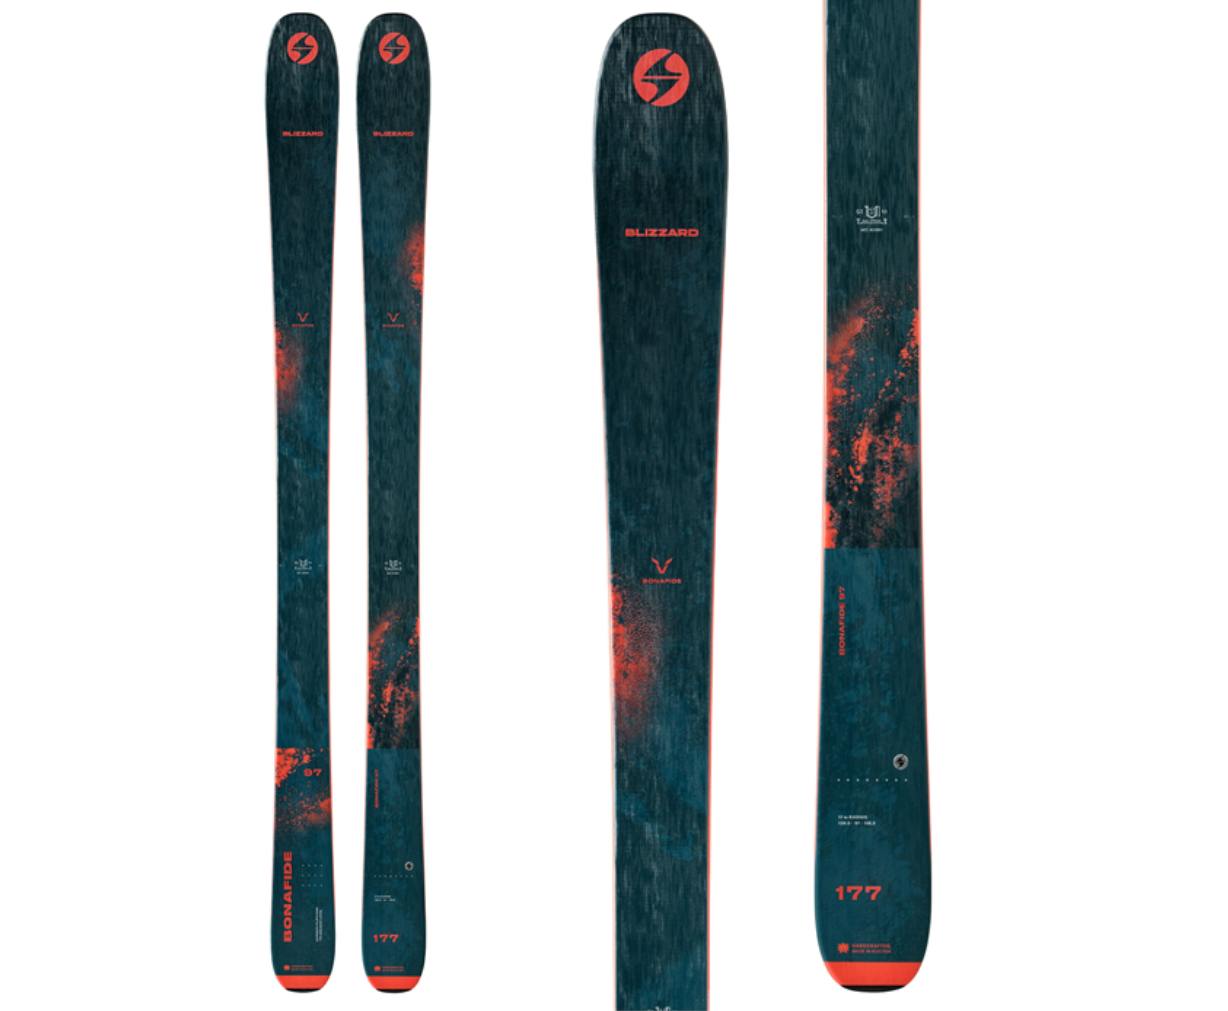 The Blizzard Bonafide 97 Skis.